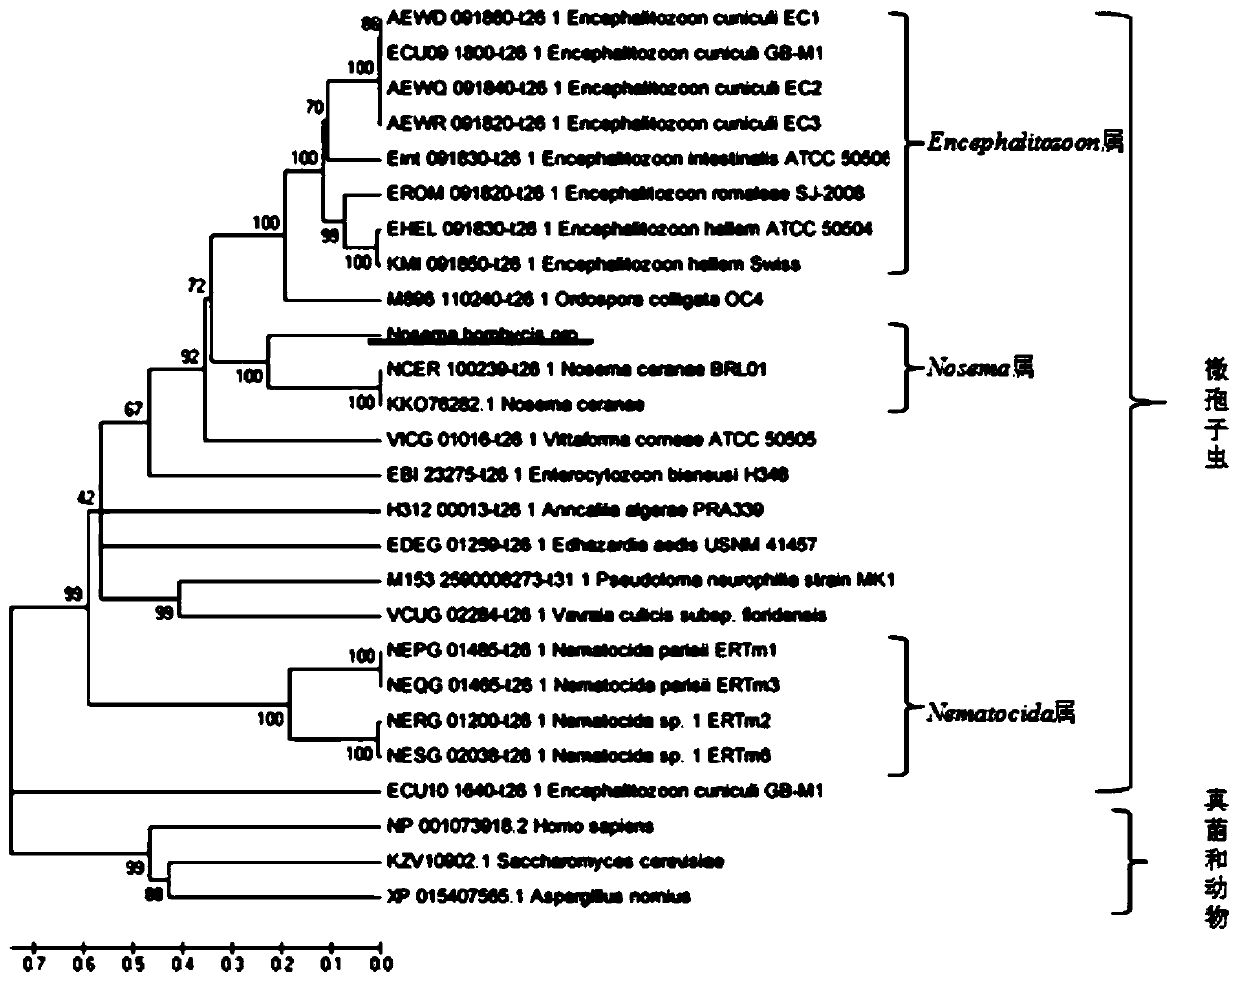 Bombyx mori microsporidia dna2 gene and its application